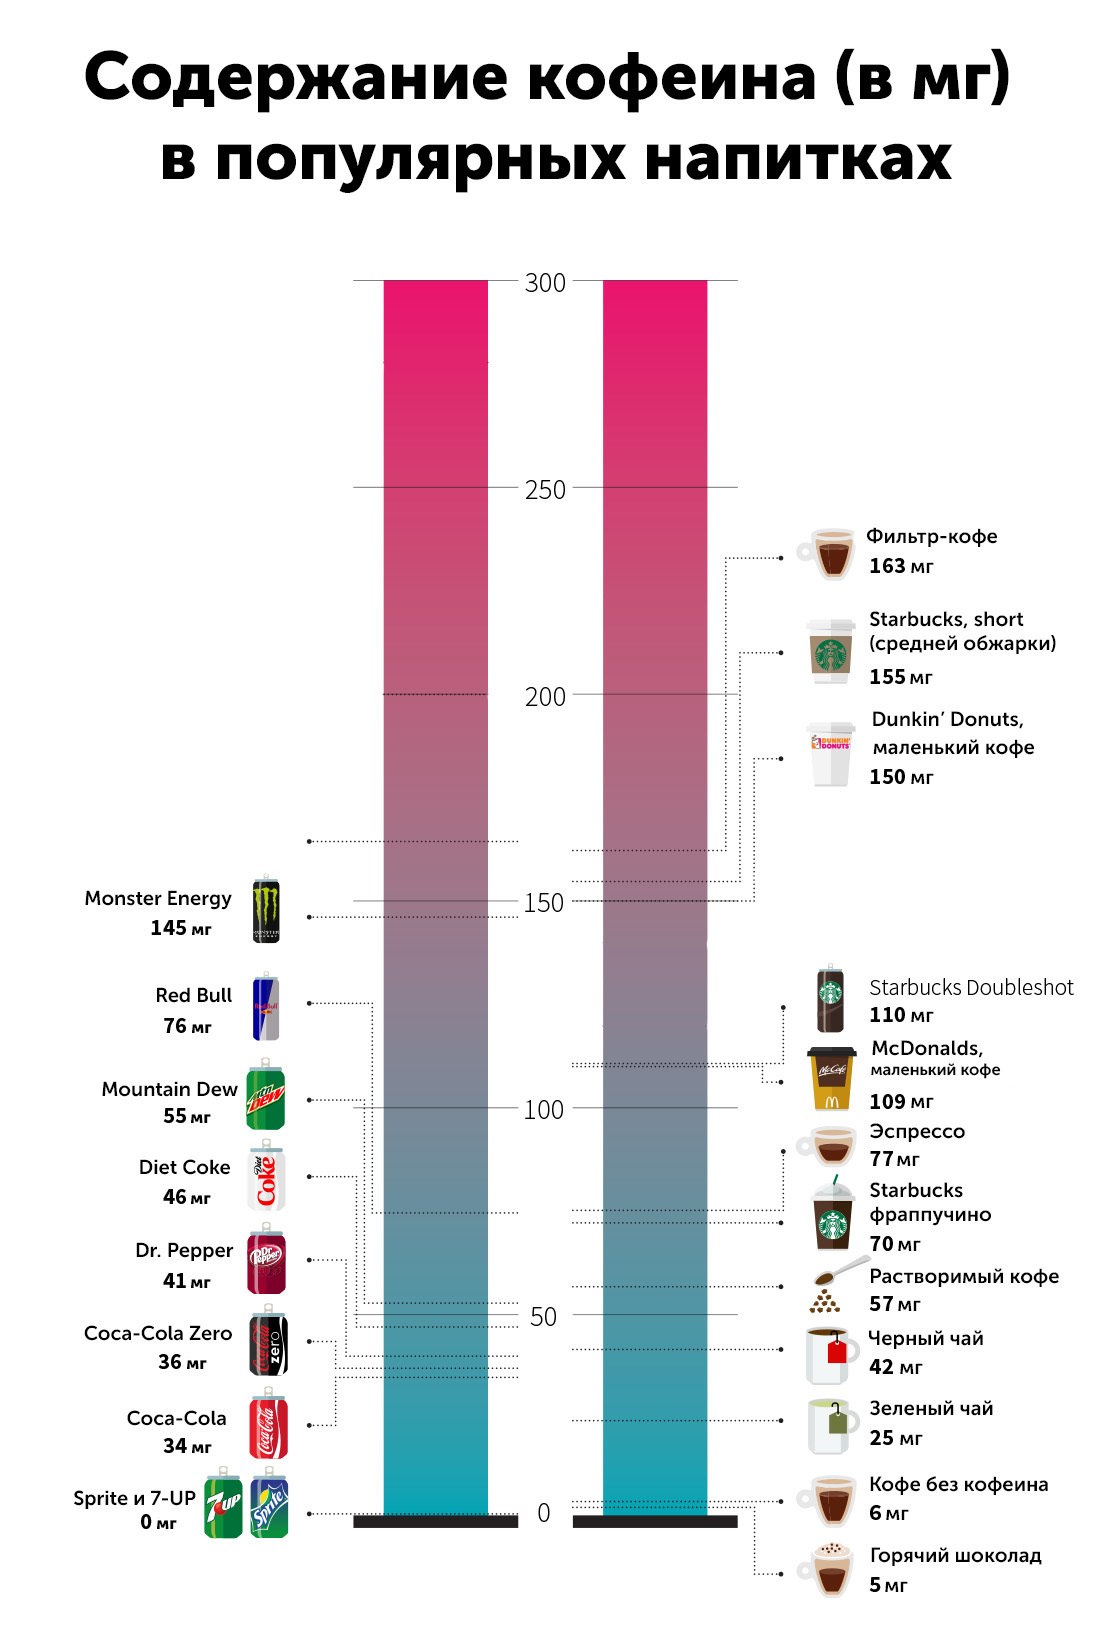 120 мг кофеина. Содержание кофеина. Количество кофеина в энергетике. Содержание кофеина в напитках. Содержание кофеина в энергетиках таблица.